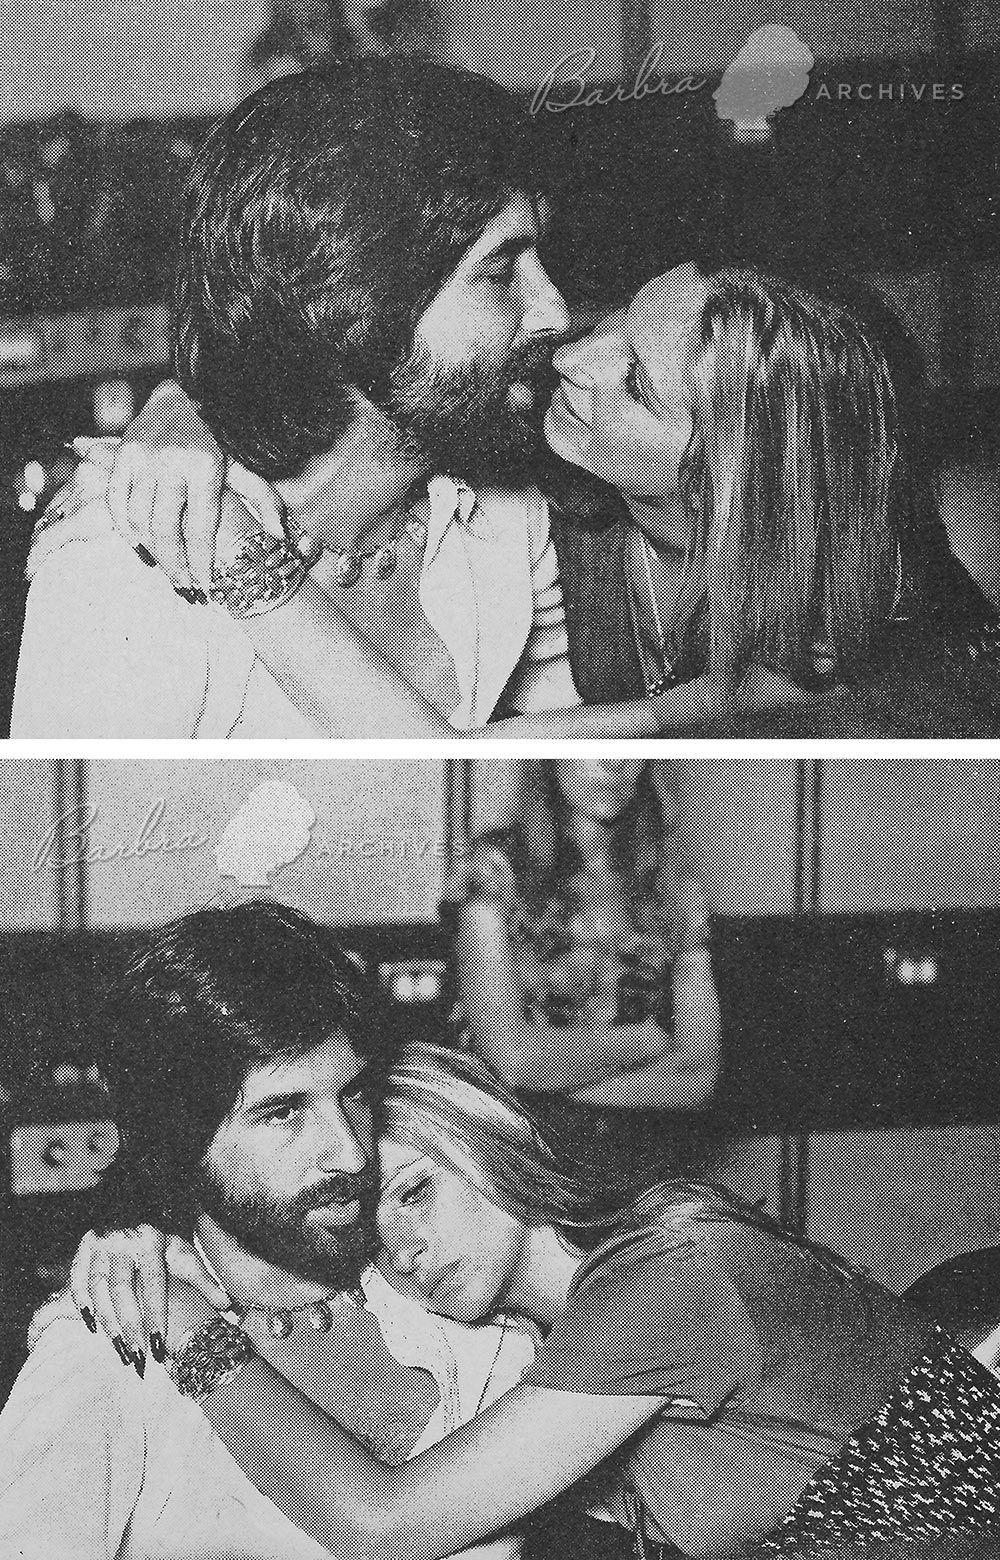 Jon Peters and Barbra Streisand in the recording studio, 1974.